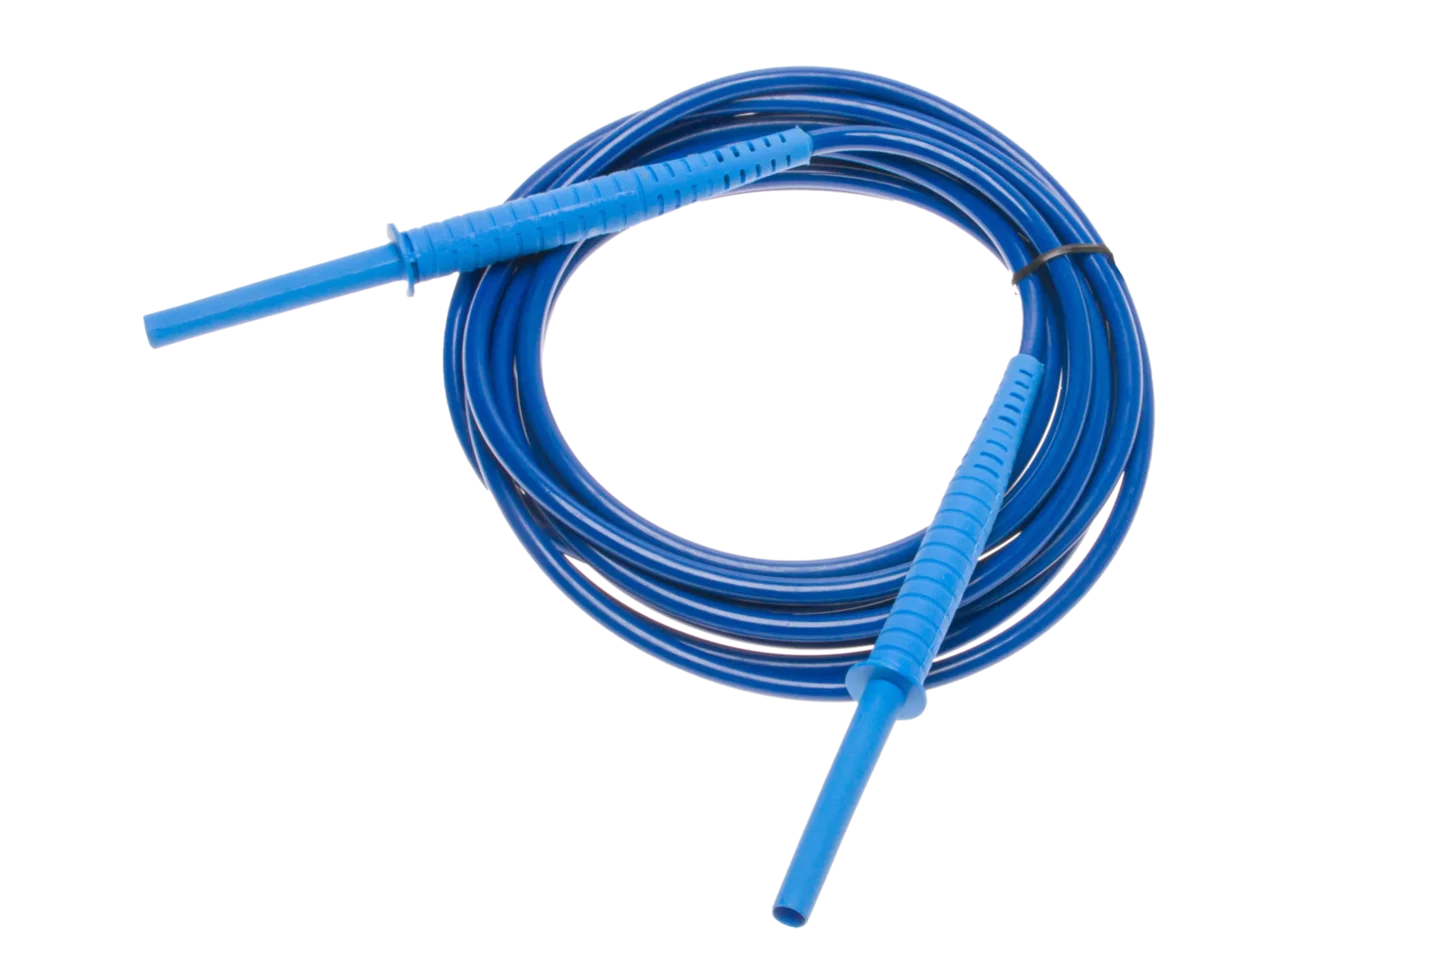 Test lead 5 m 11 kV (banana plugs) blue